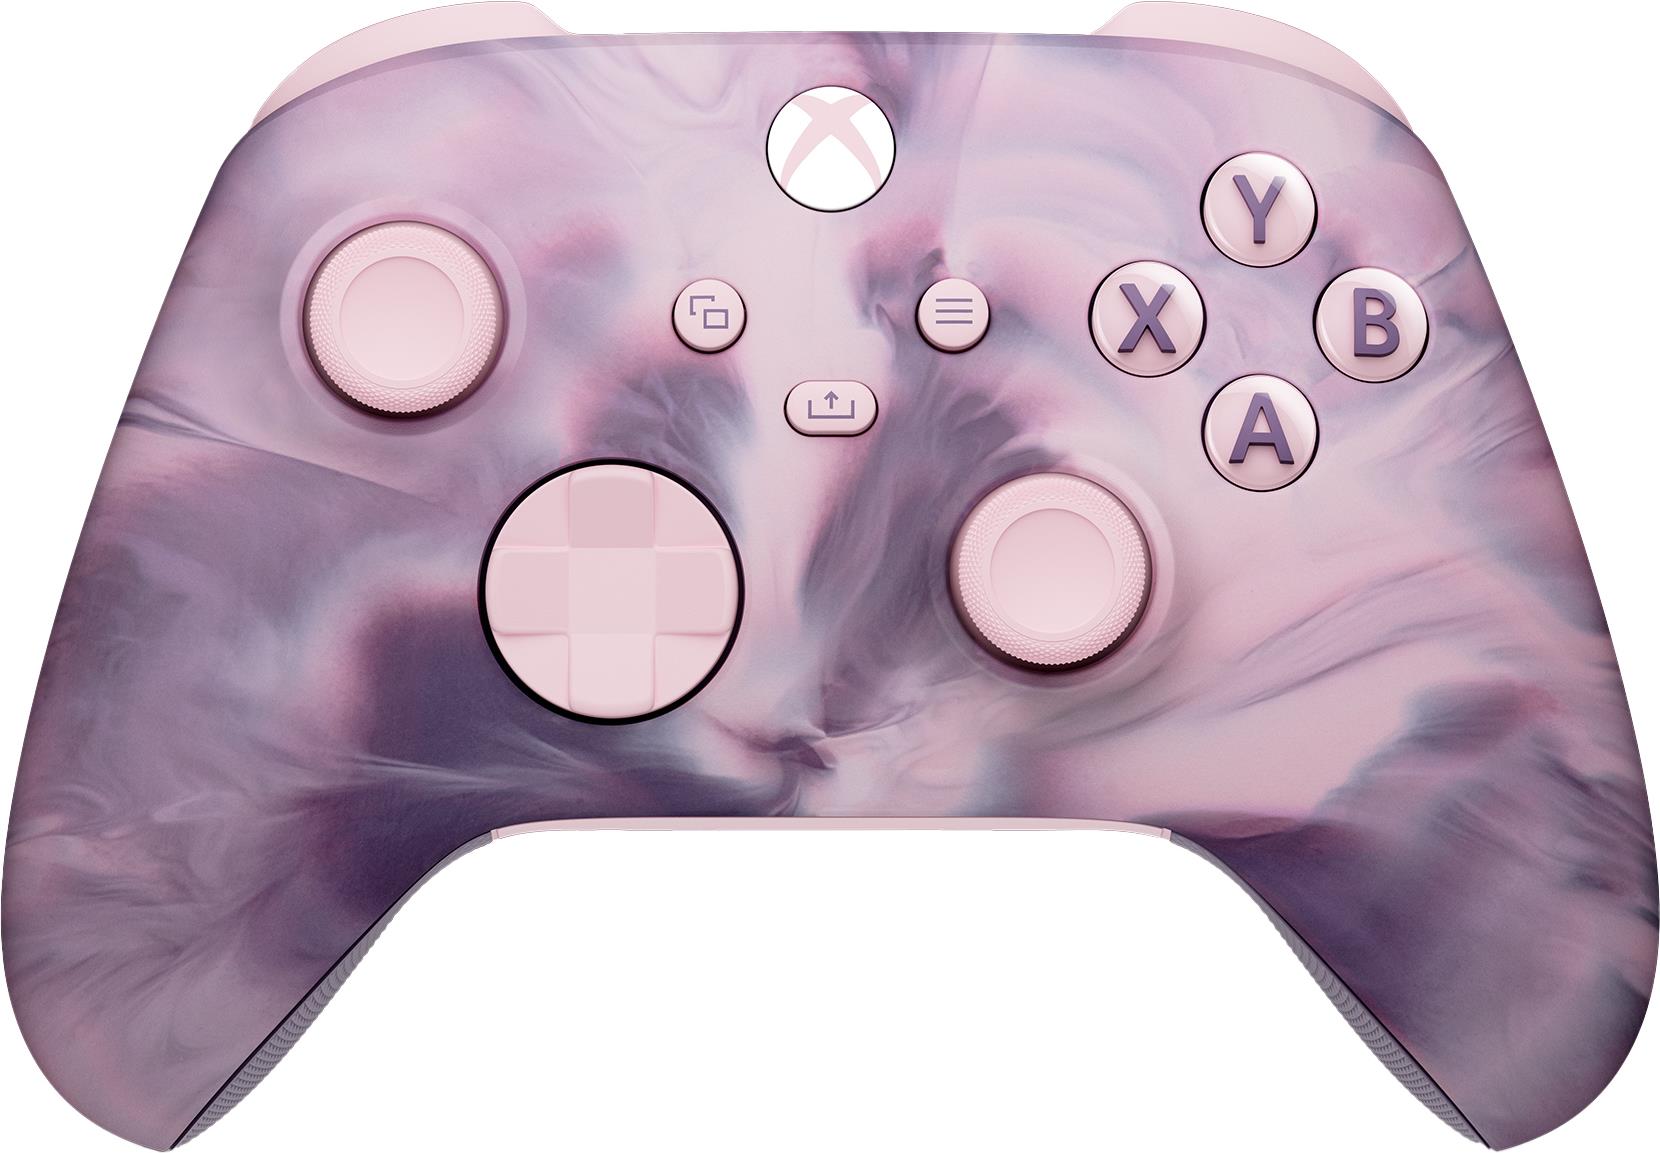 Image of Microsoft Xbox Wireless Controller - Dream Vapor Special Edition Pink Bluetooth Gamepad Analog / Digital Android - PC - Xbox One - Xbox Series S - Xbox Series X - iOS (QAU-00126)